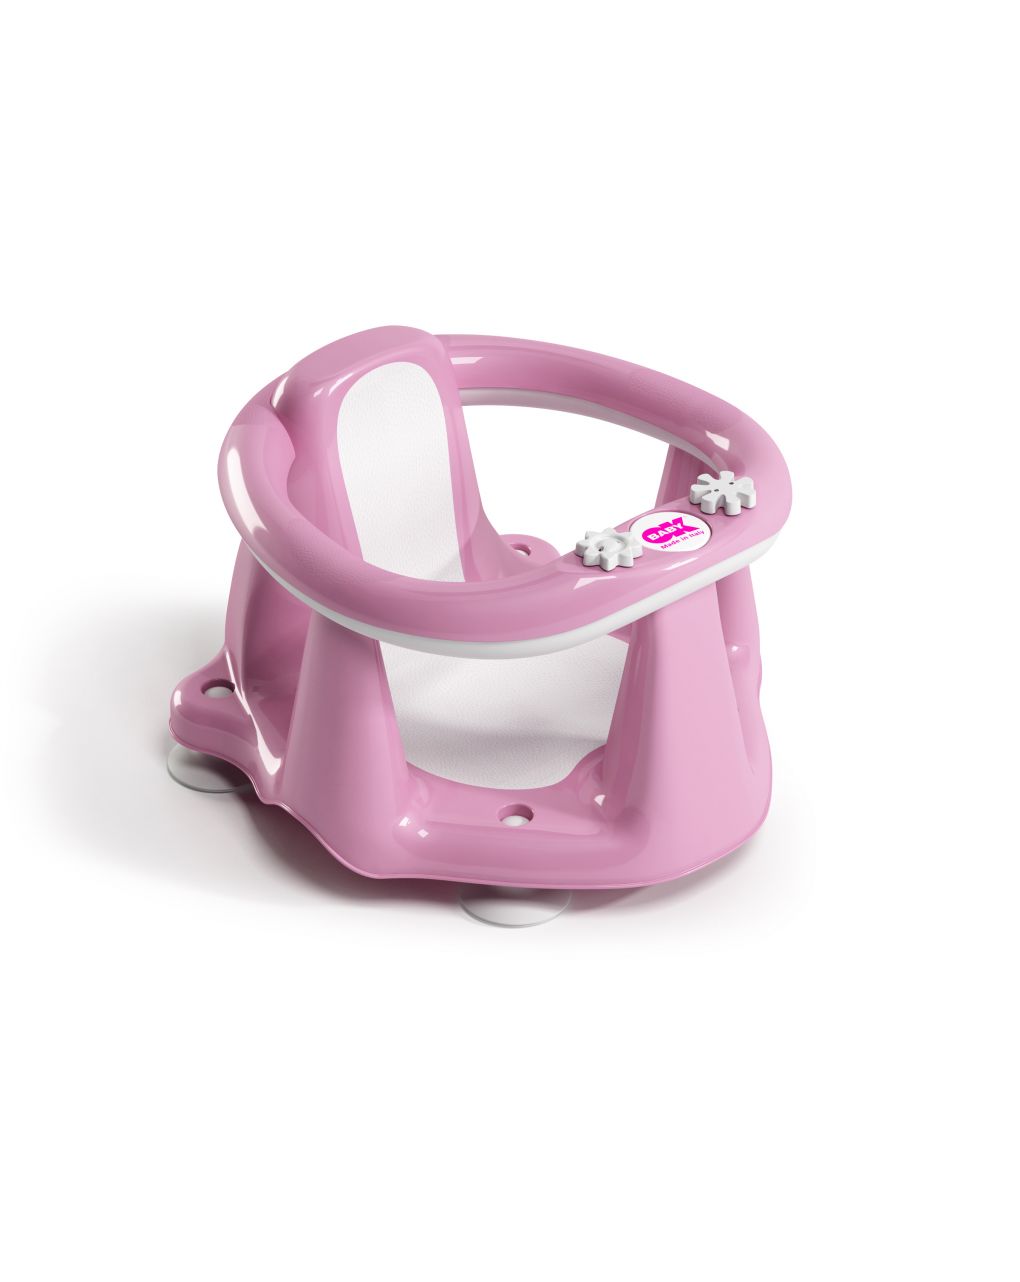 Flipper evolution rosa - seduta antiscivolo per bagnetto - ok baby